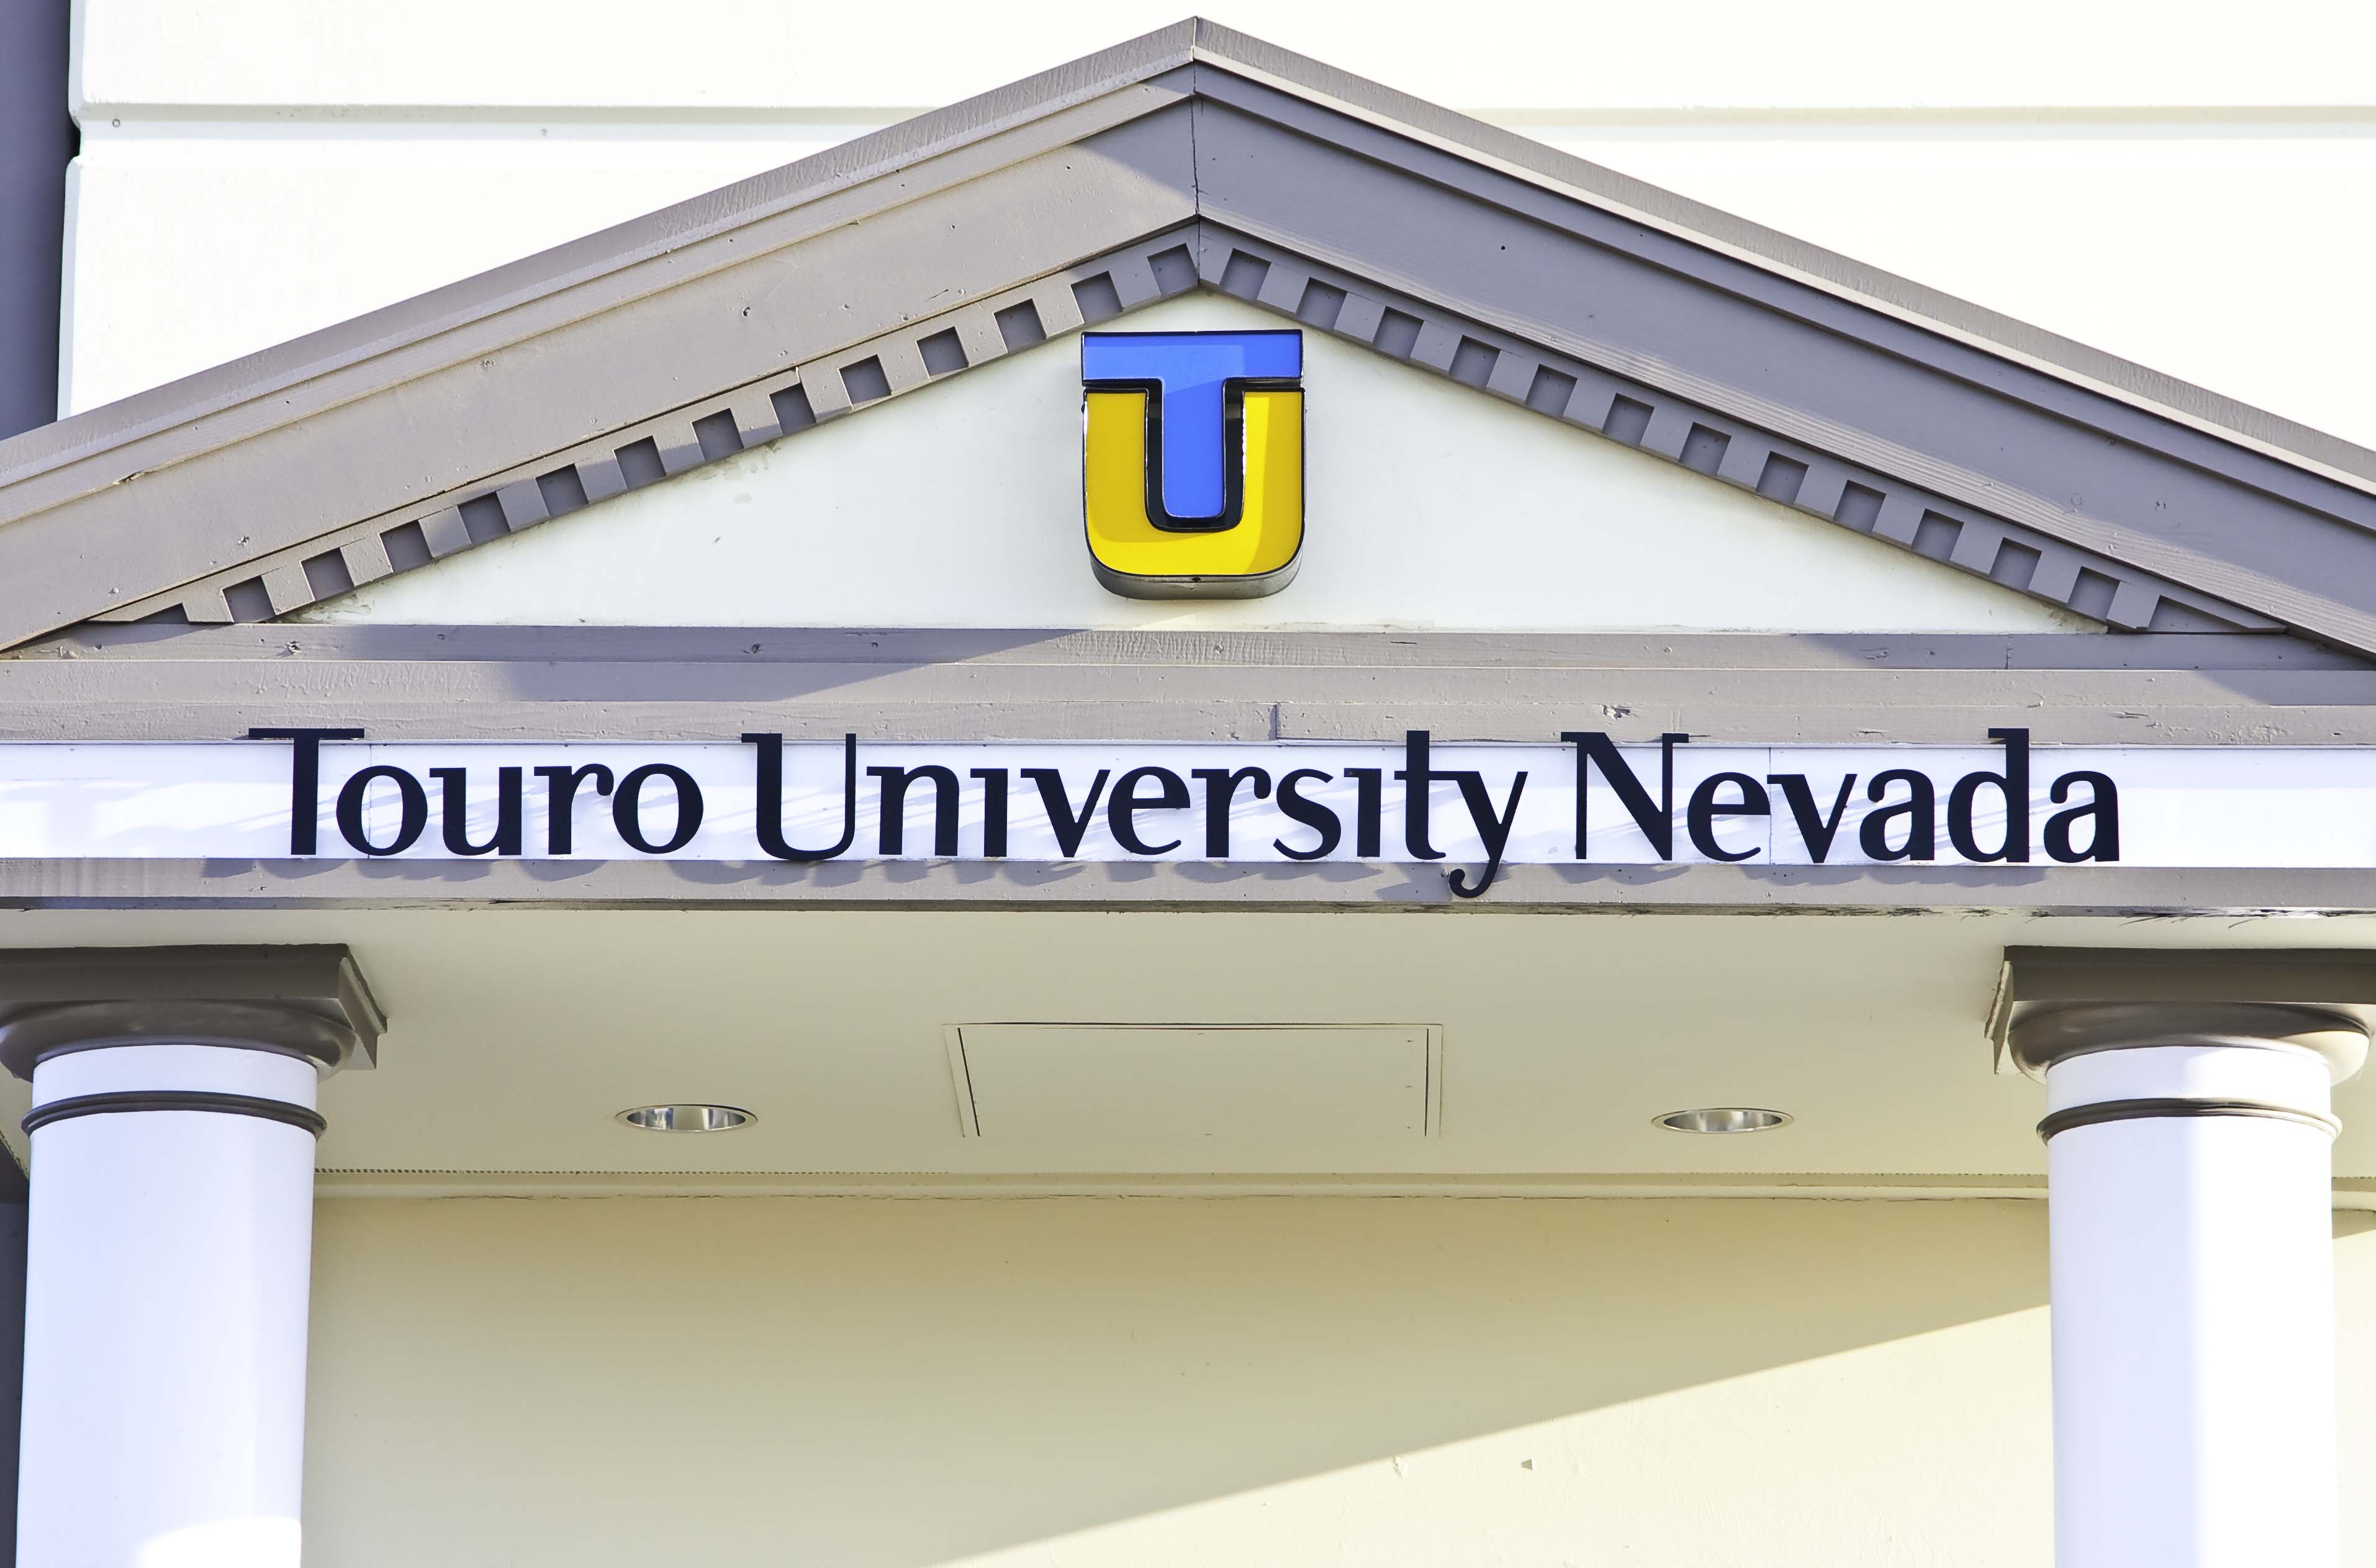 The exterior of the Touro University Nevada building. 